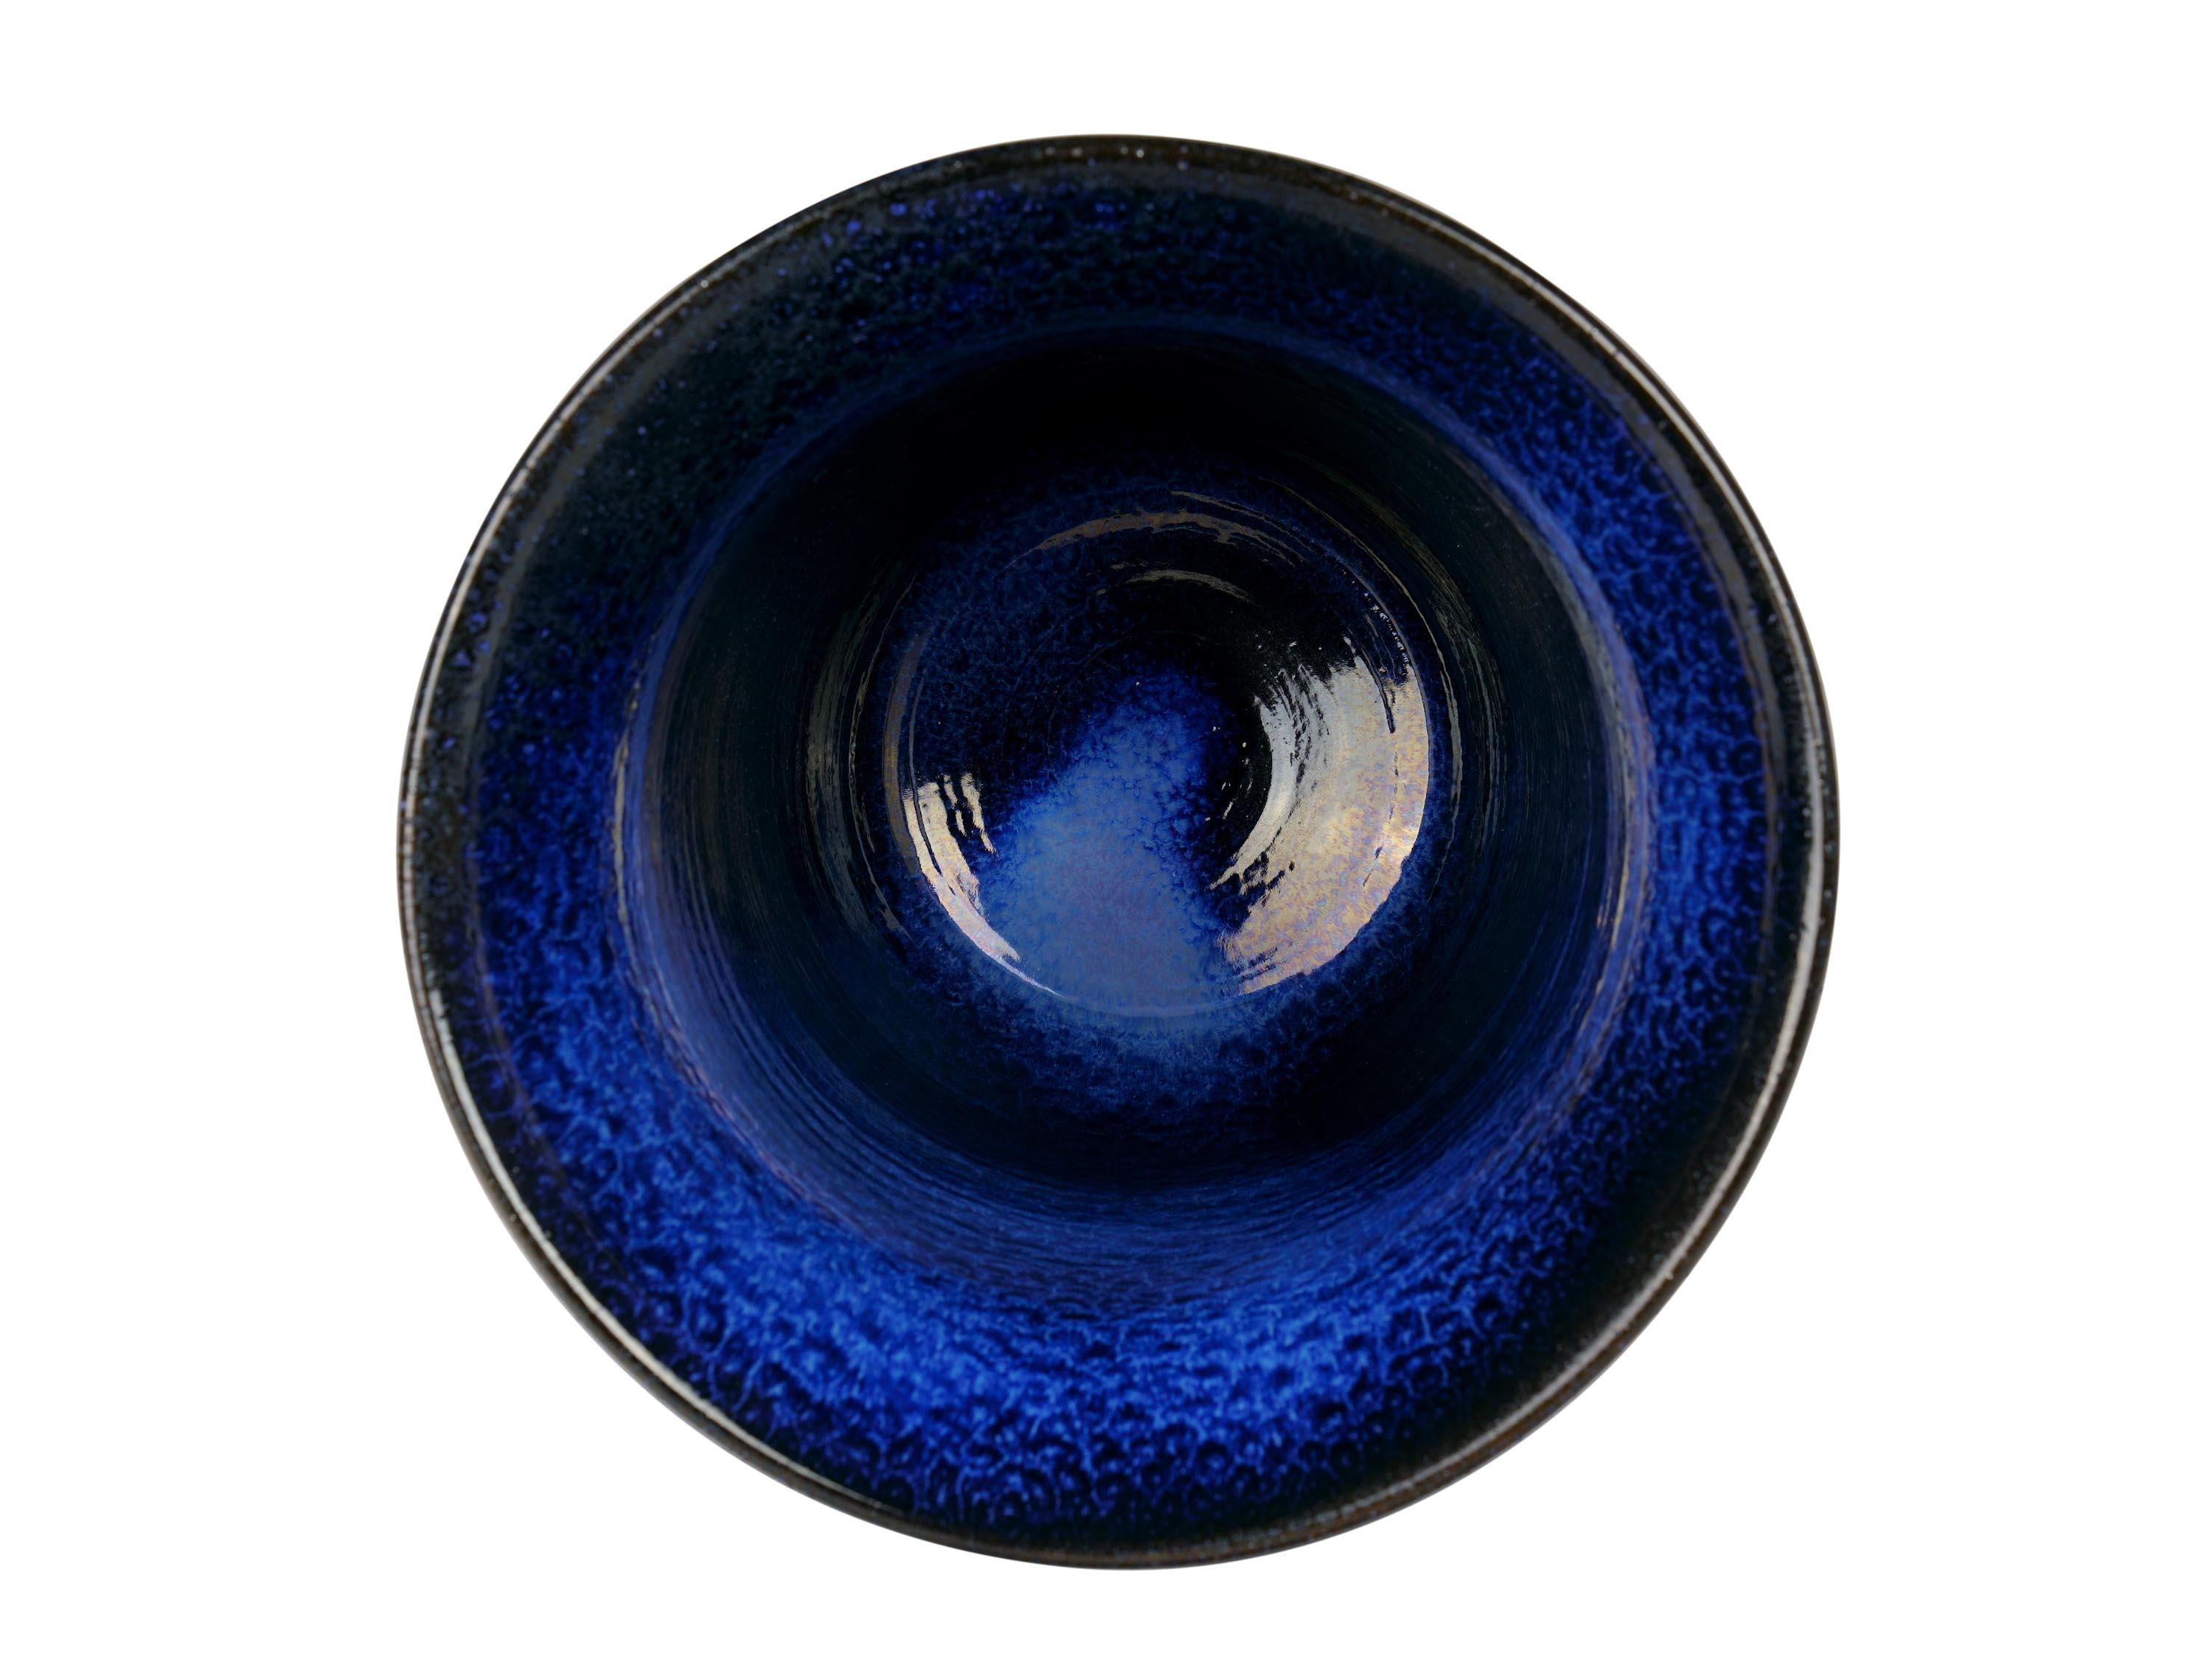 Hand-Carved Cobalt Blue Majolica Vase Vessel Ceramic Centerpiece Sculpture Handmade, Italy For Sale